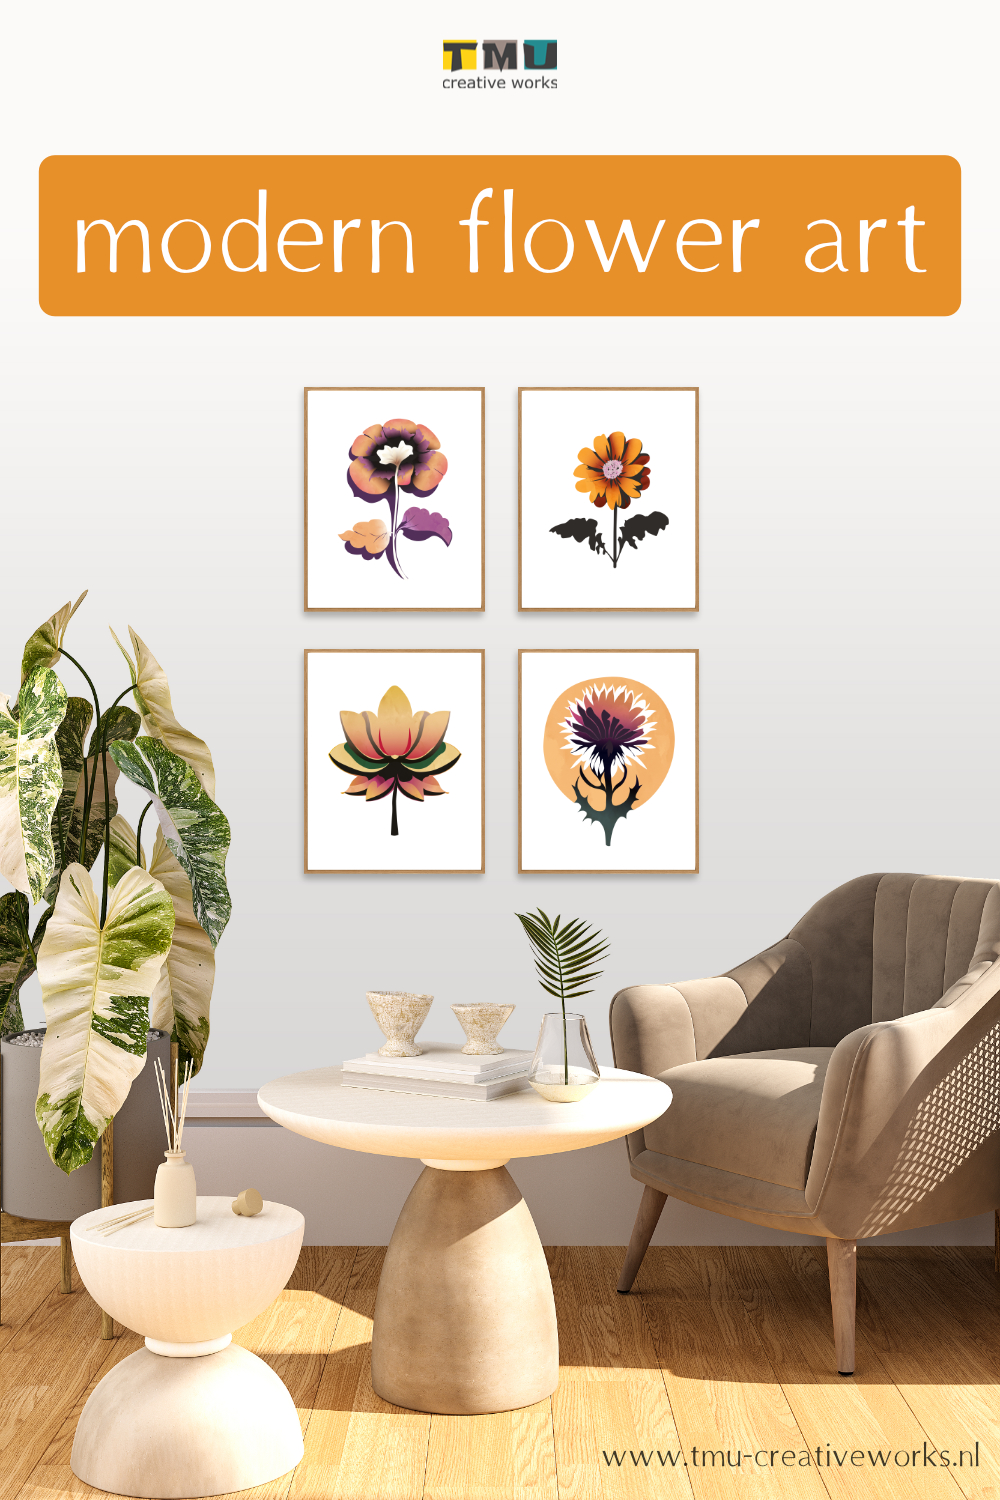 Modern flower art